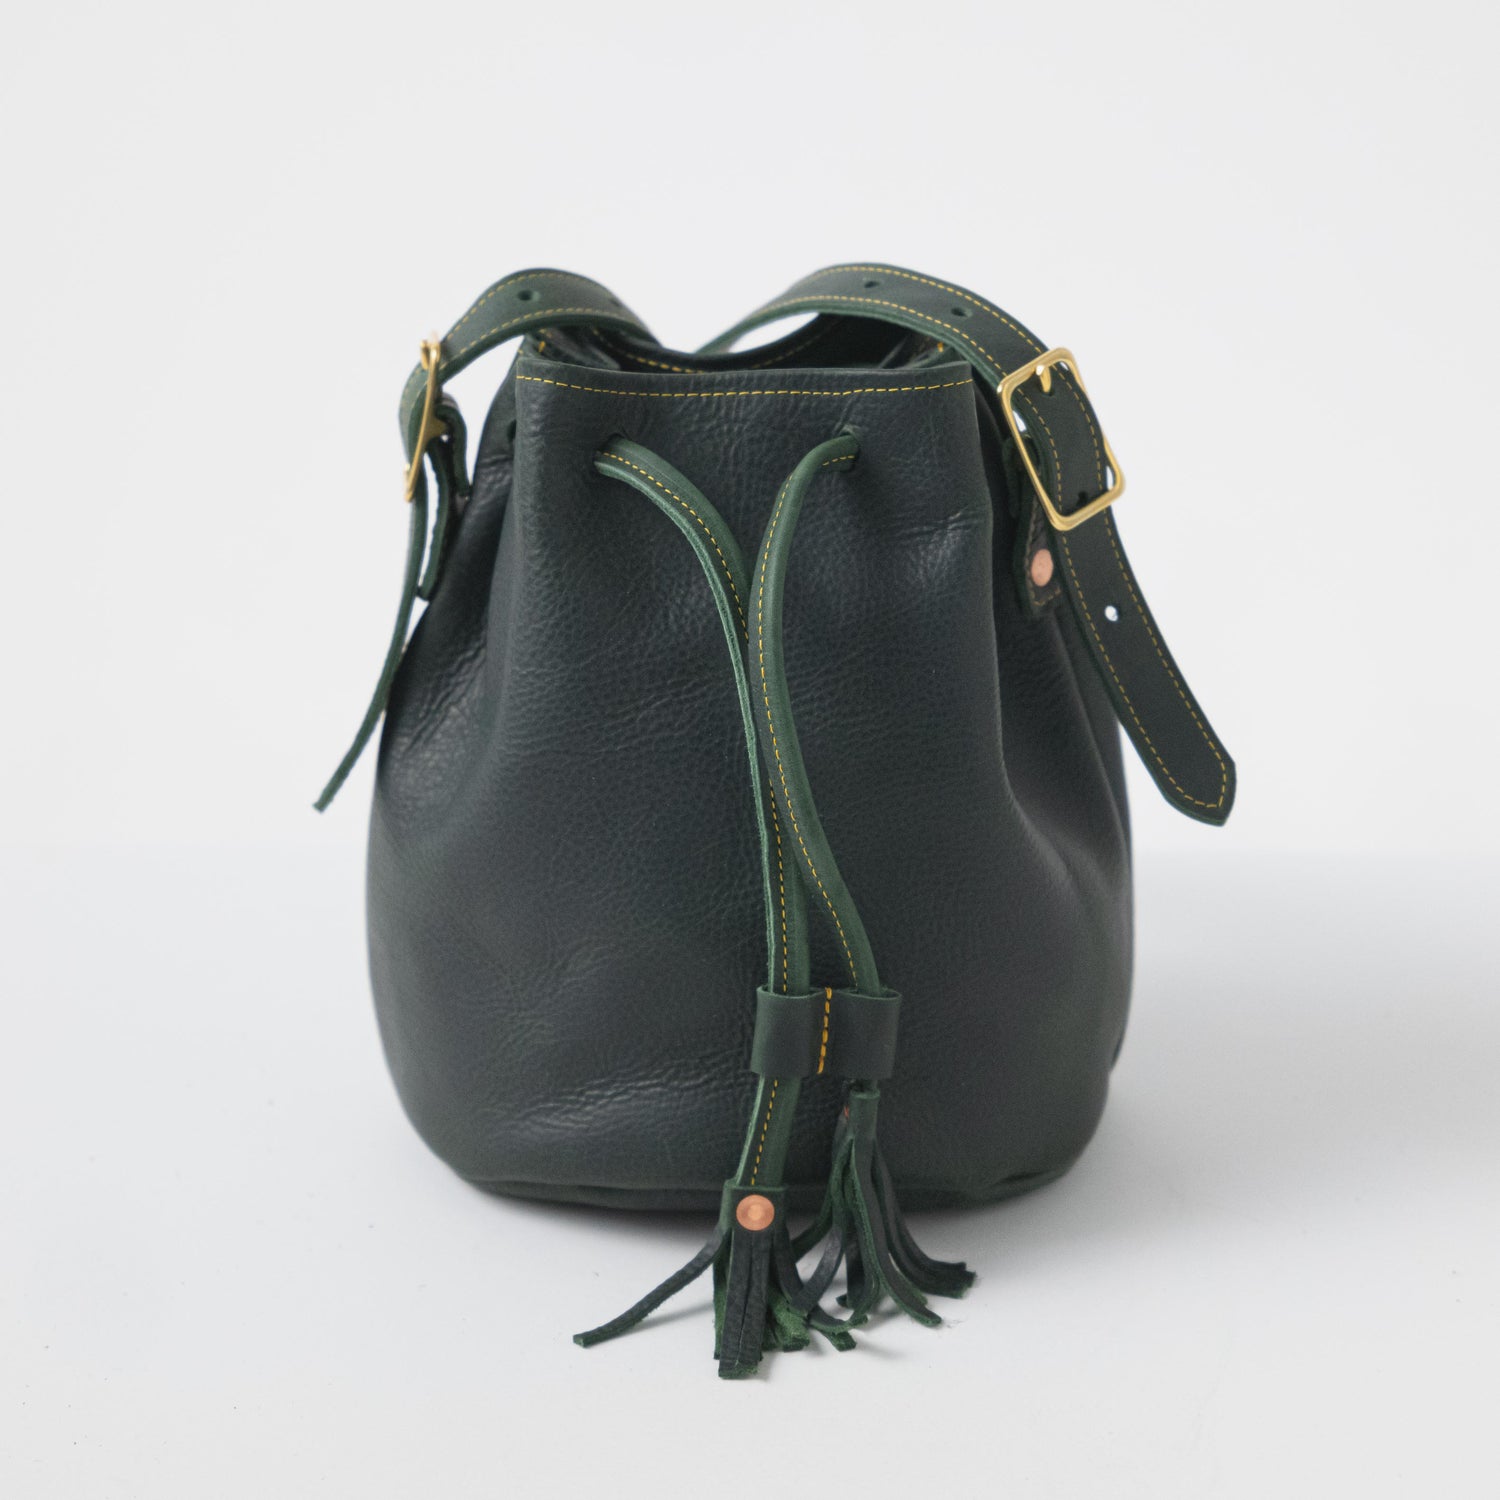 vintage dark brown leather genuine coach bag $125 - bags and